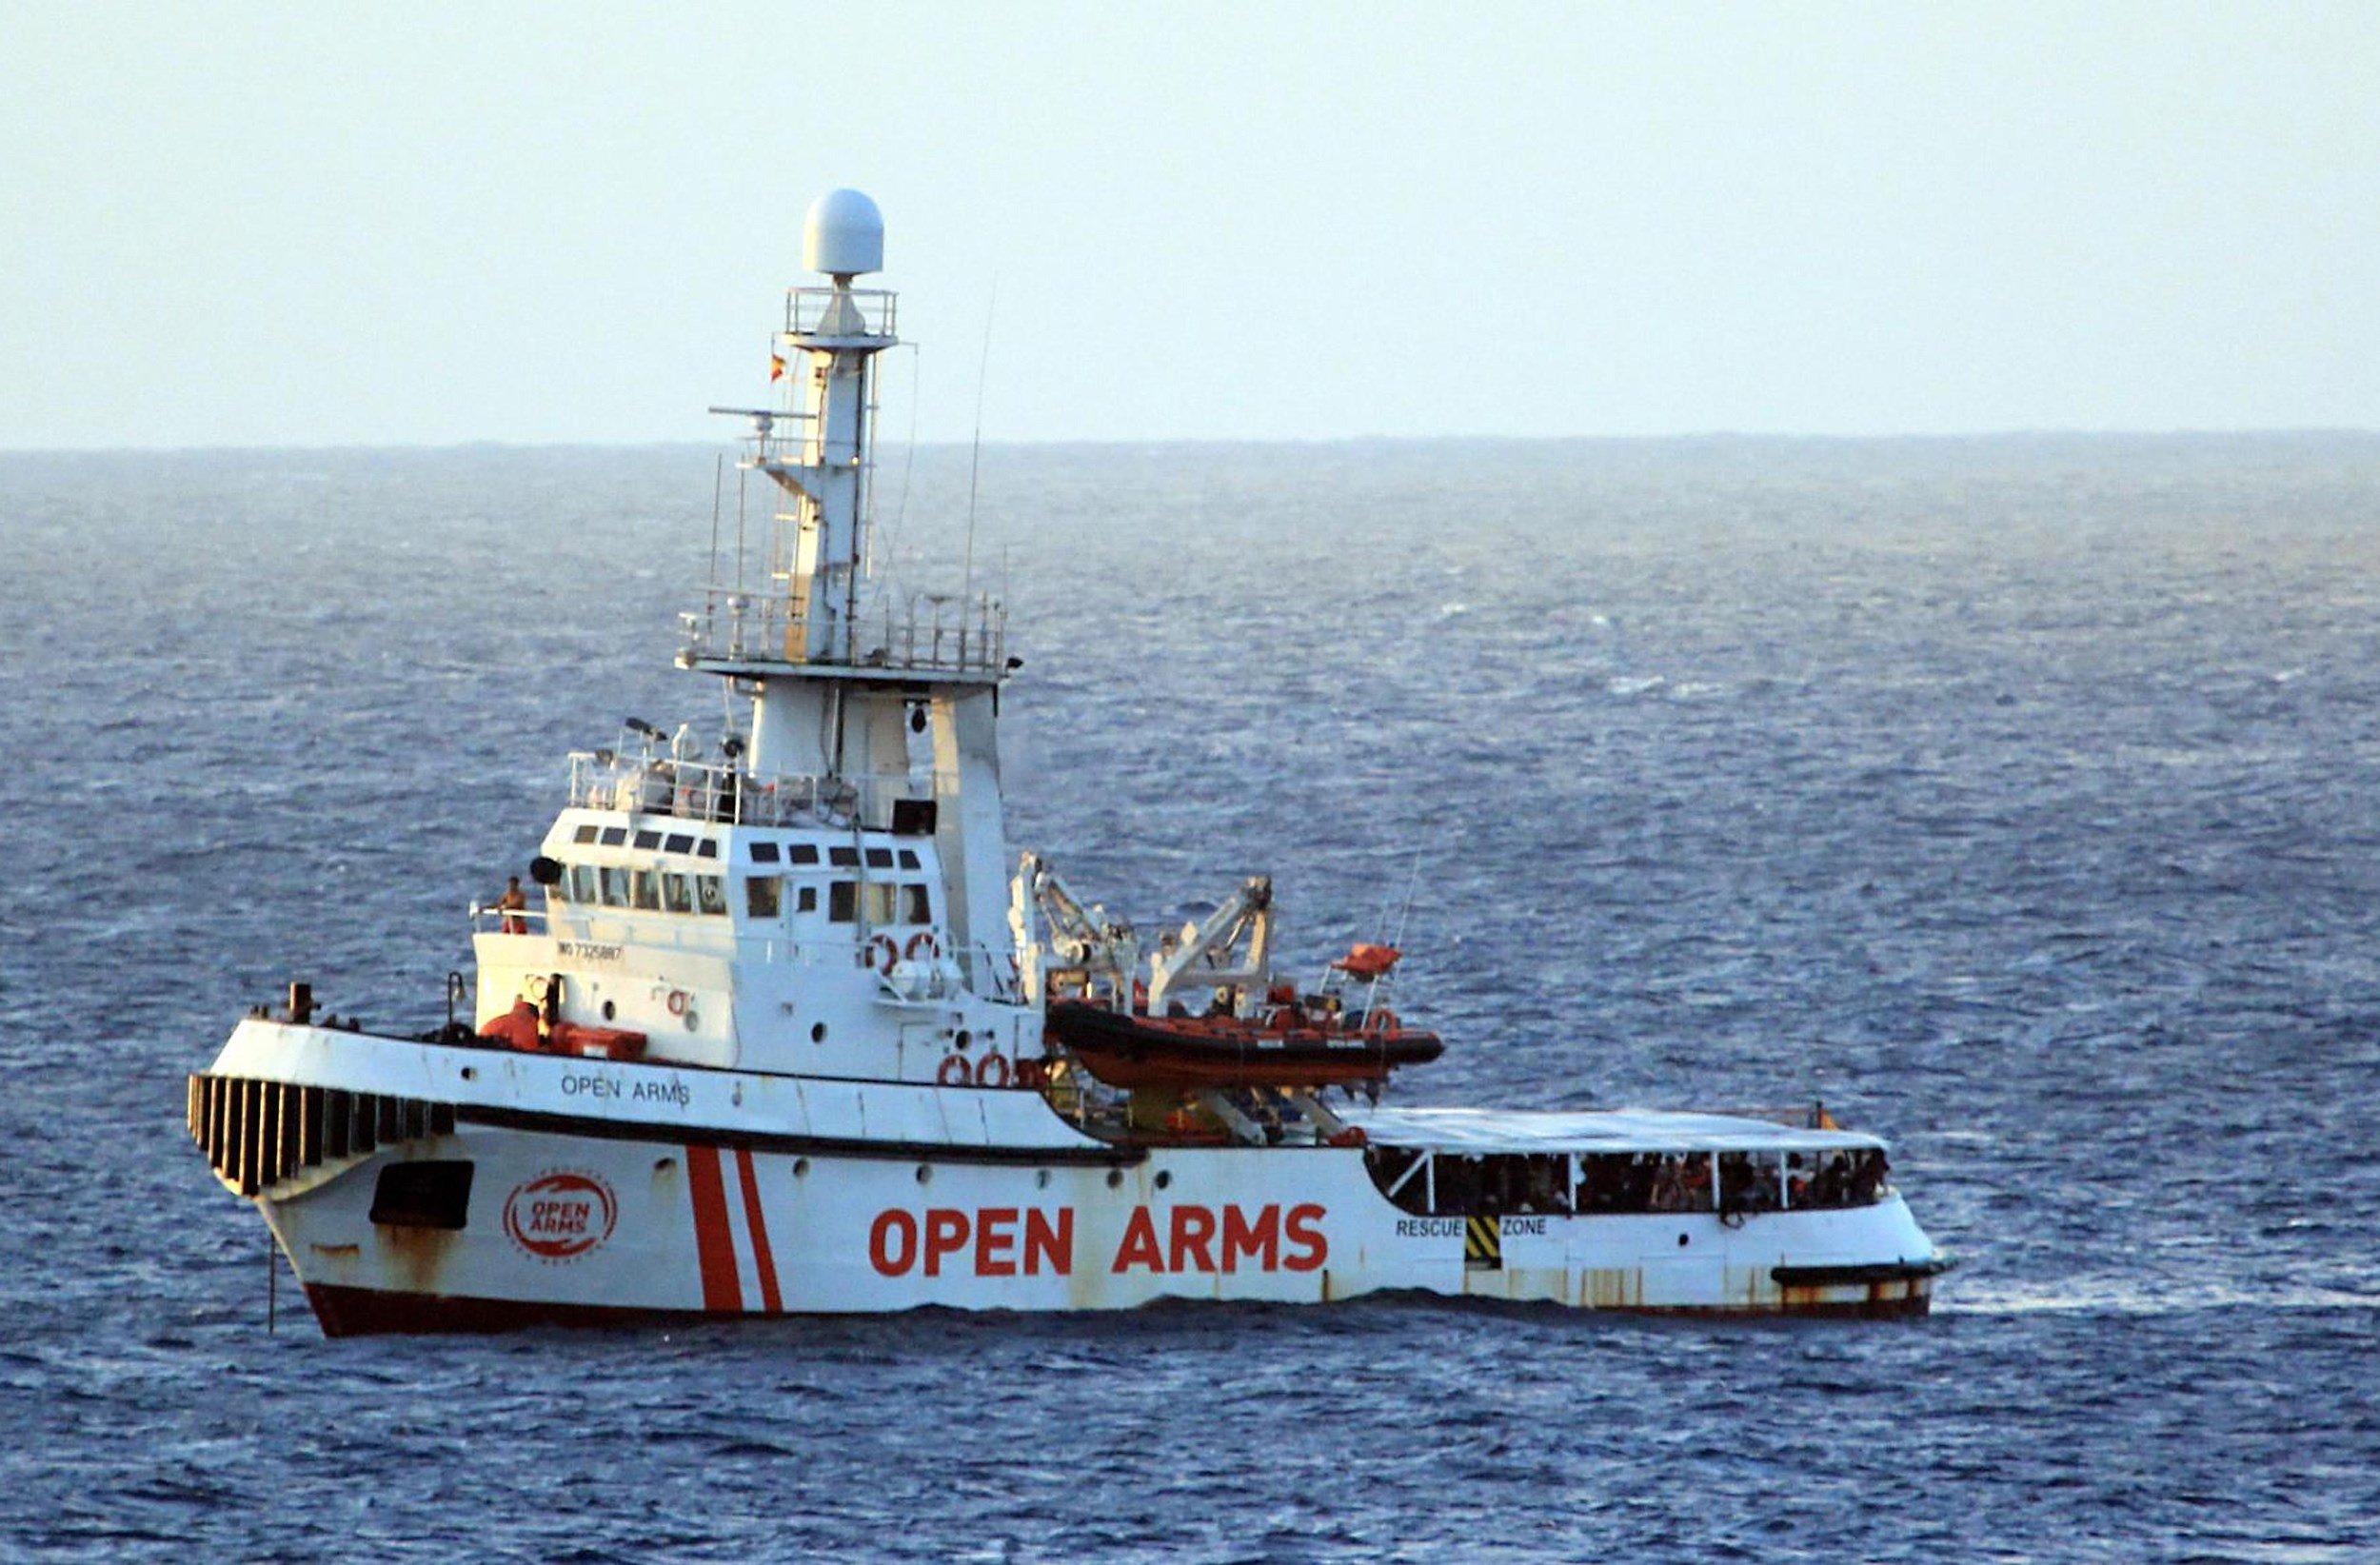 Open Arms envía una solicitud urgente a Lampedusa para poder desembarcar